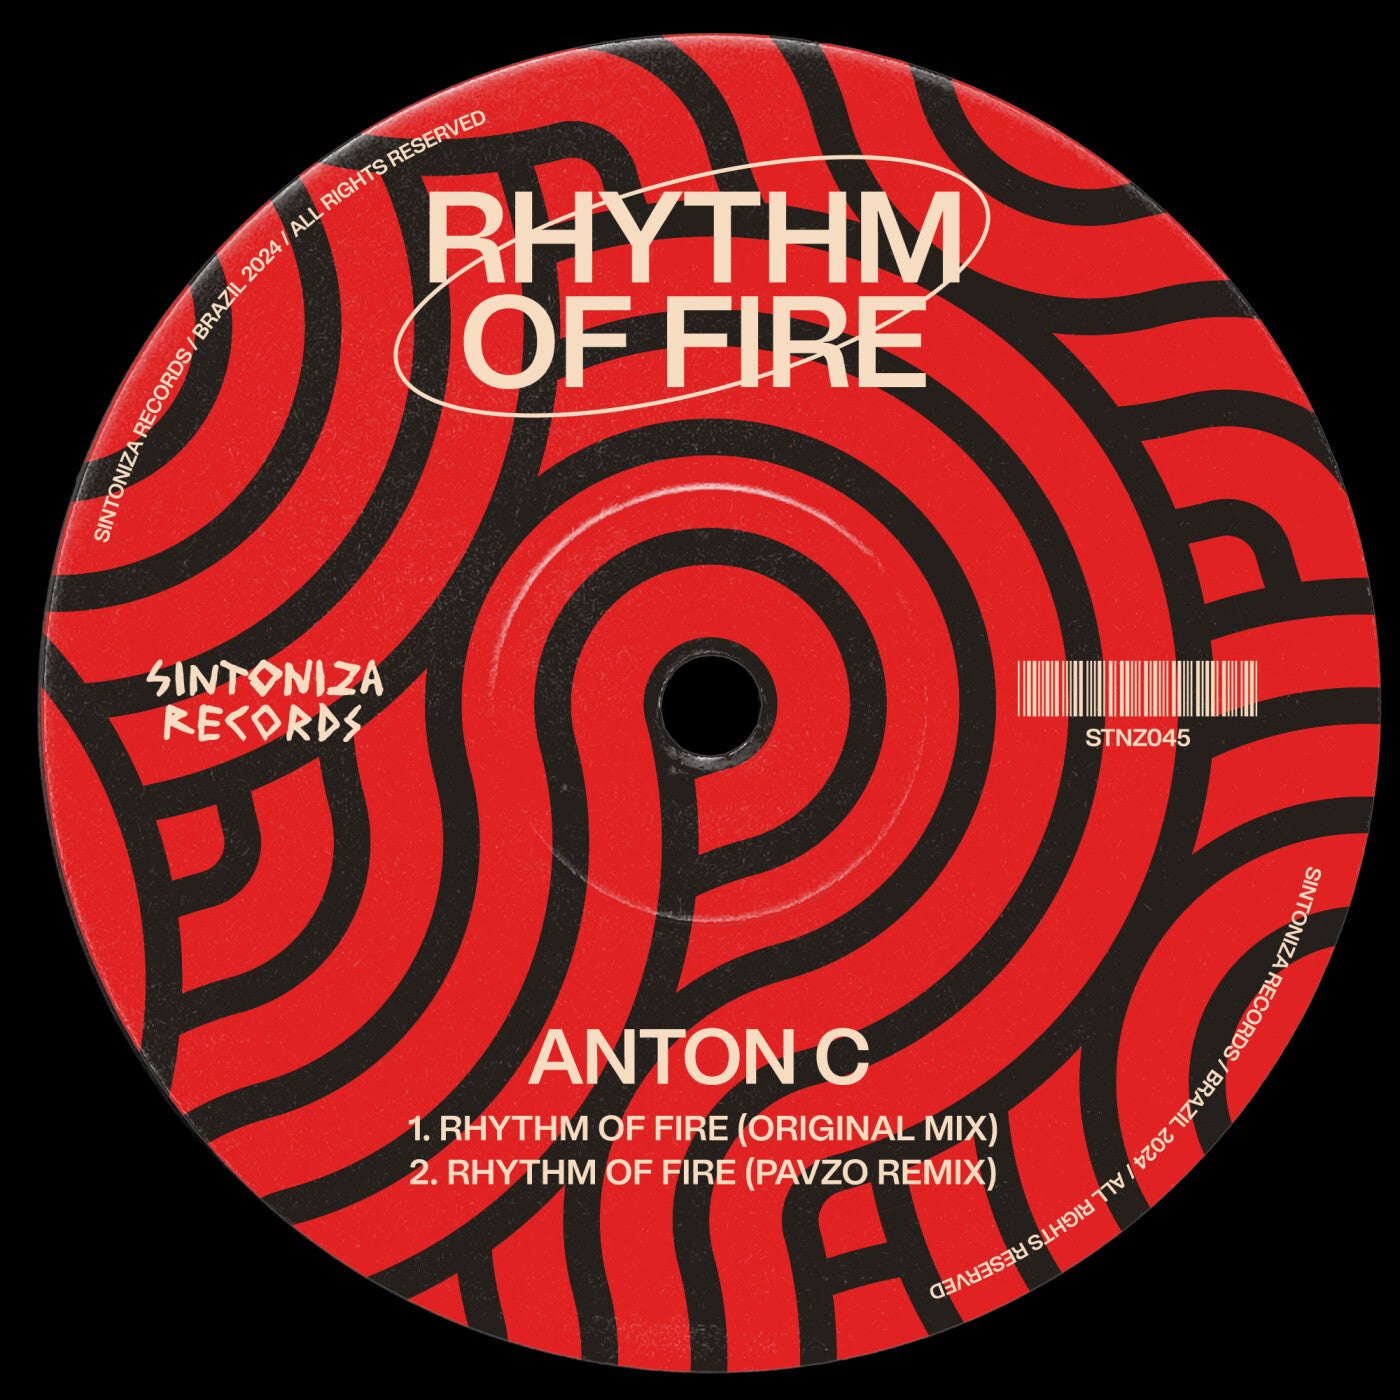 image cover: Anton C - Rhythm Of Fire on Sintoniza Records